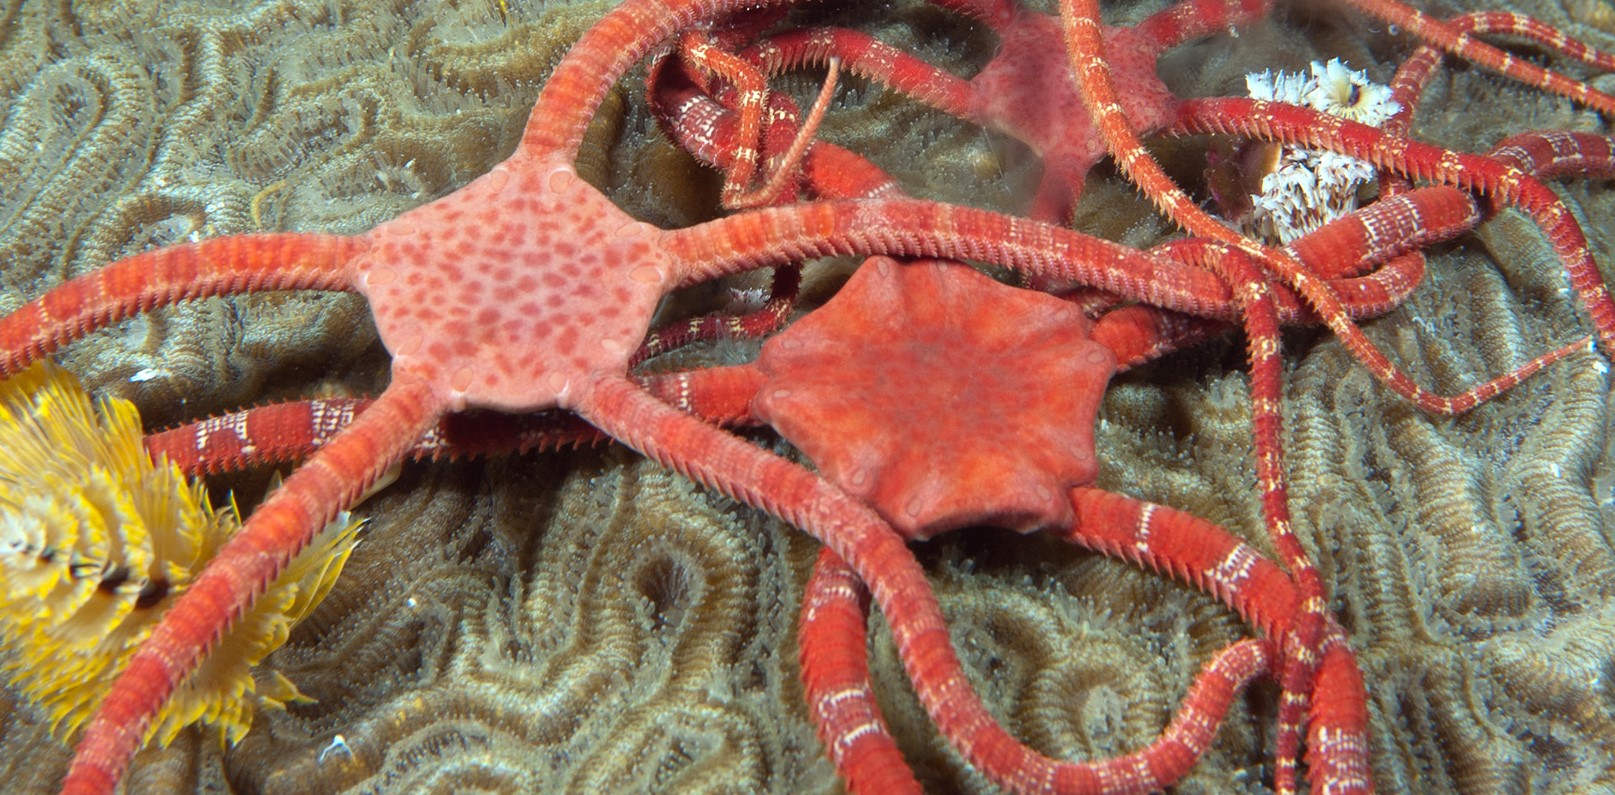 Ruby brittle starfish